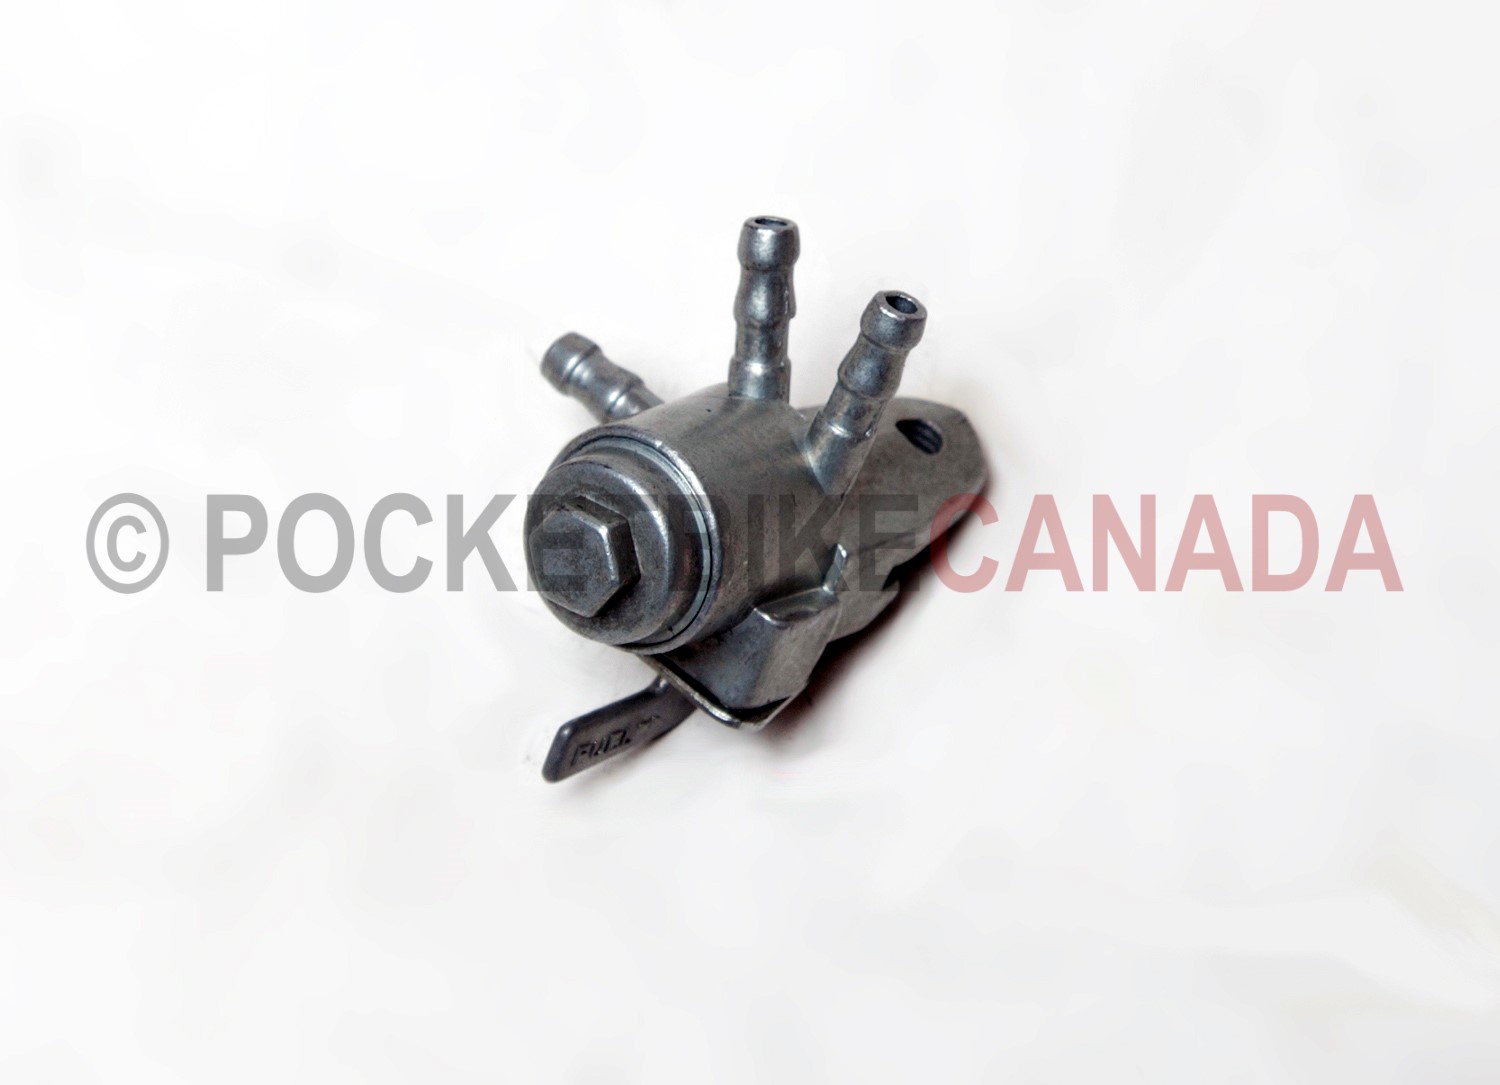 POCKET BIKE CANADA - BIKES & PARTS - Fuel Shut Off Valve for 250cc, X35